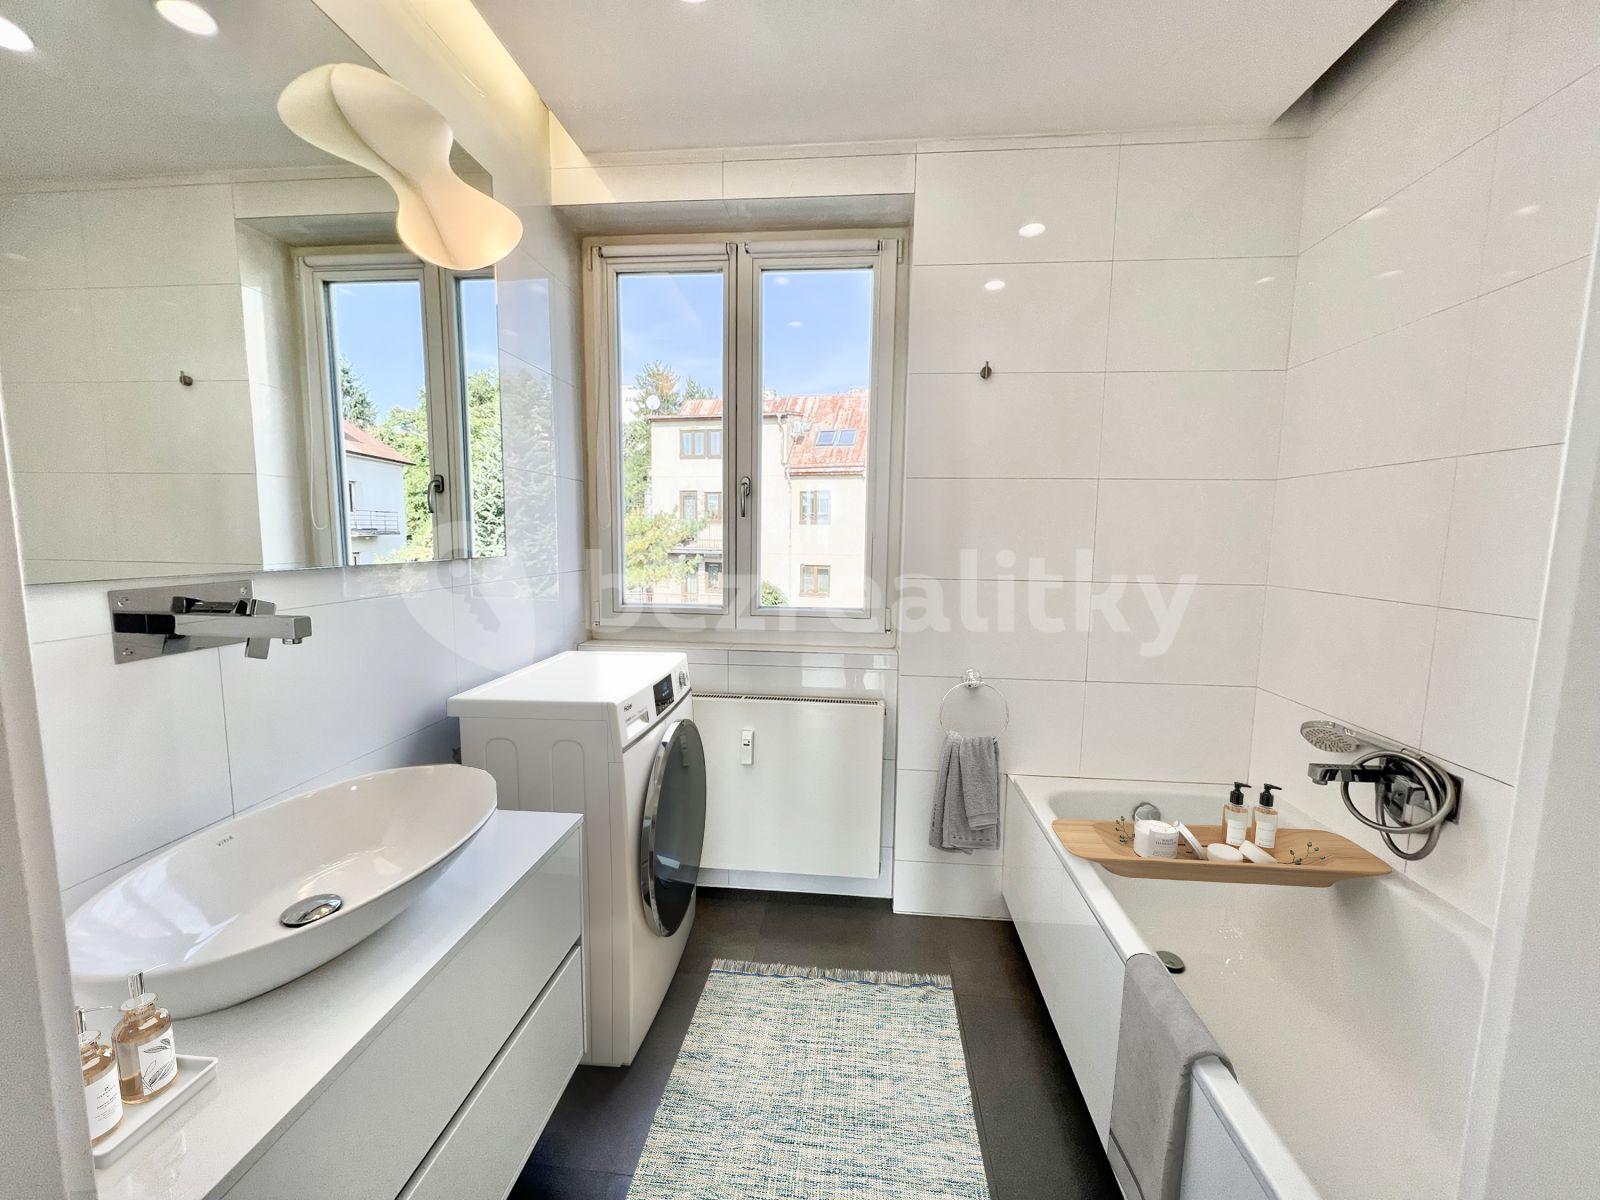 2 bedroom with open-plan kitchen flat for sale, 75 m², Na Šutce, Prague, Prague